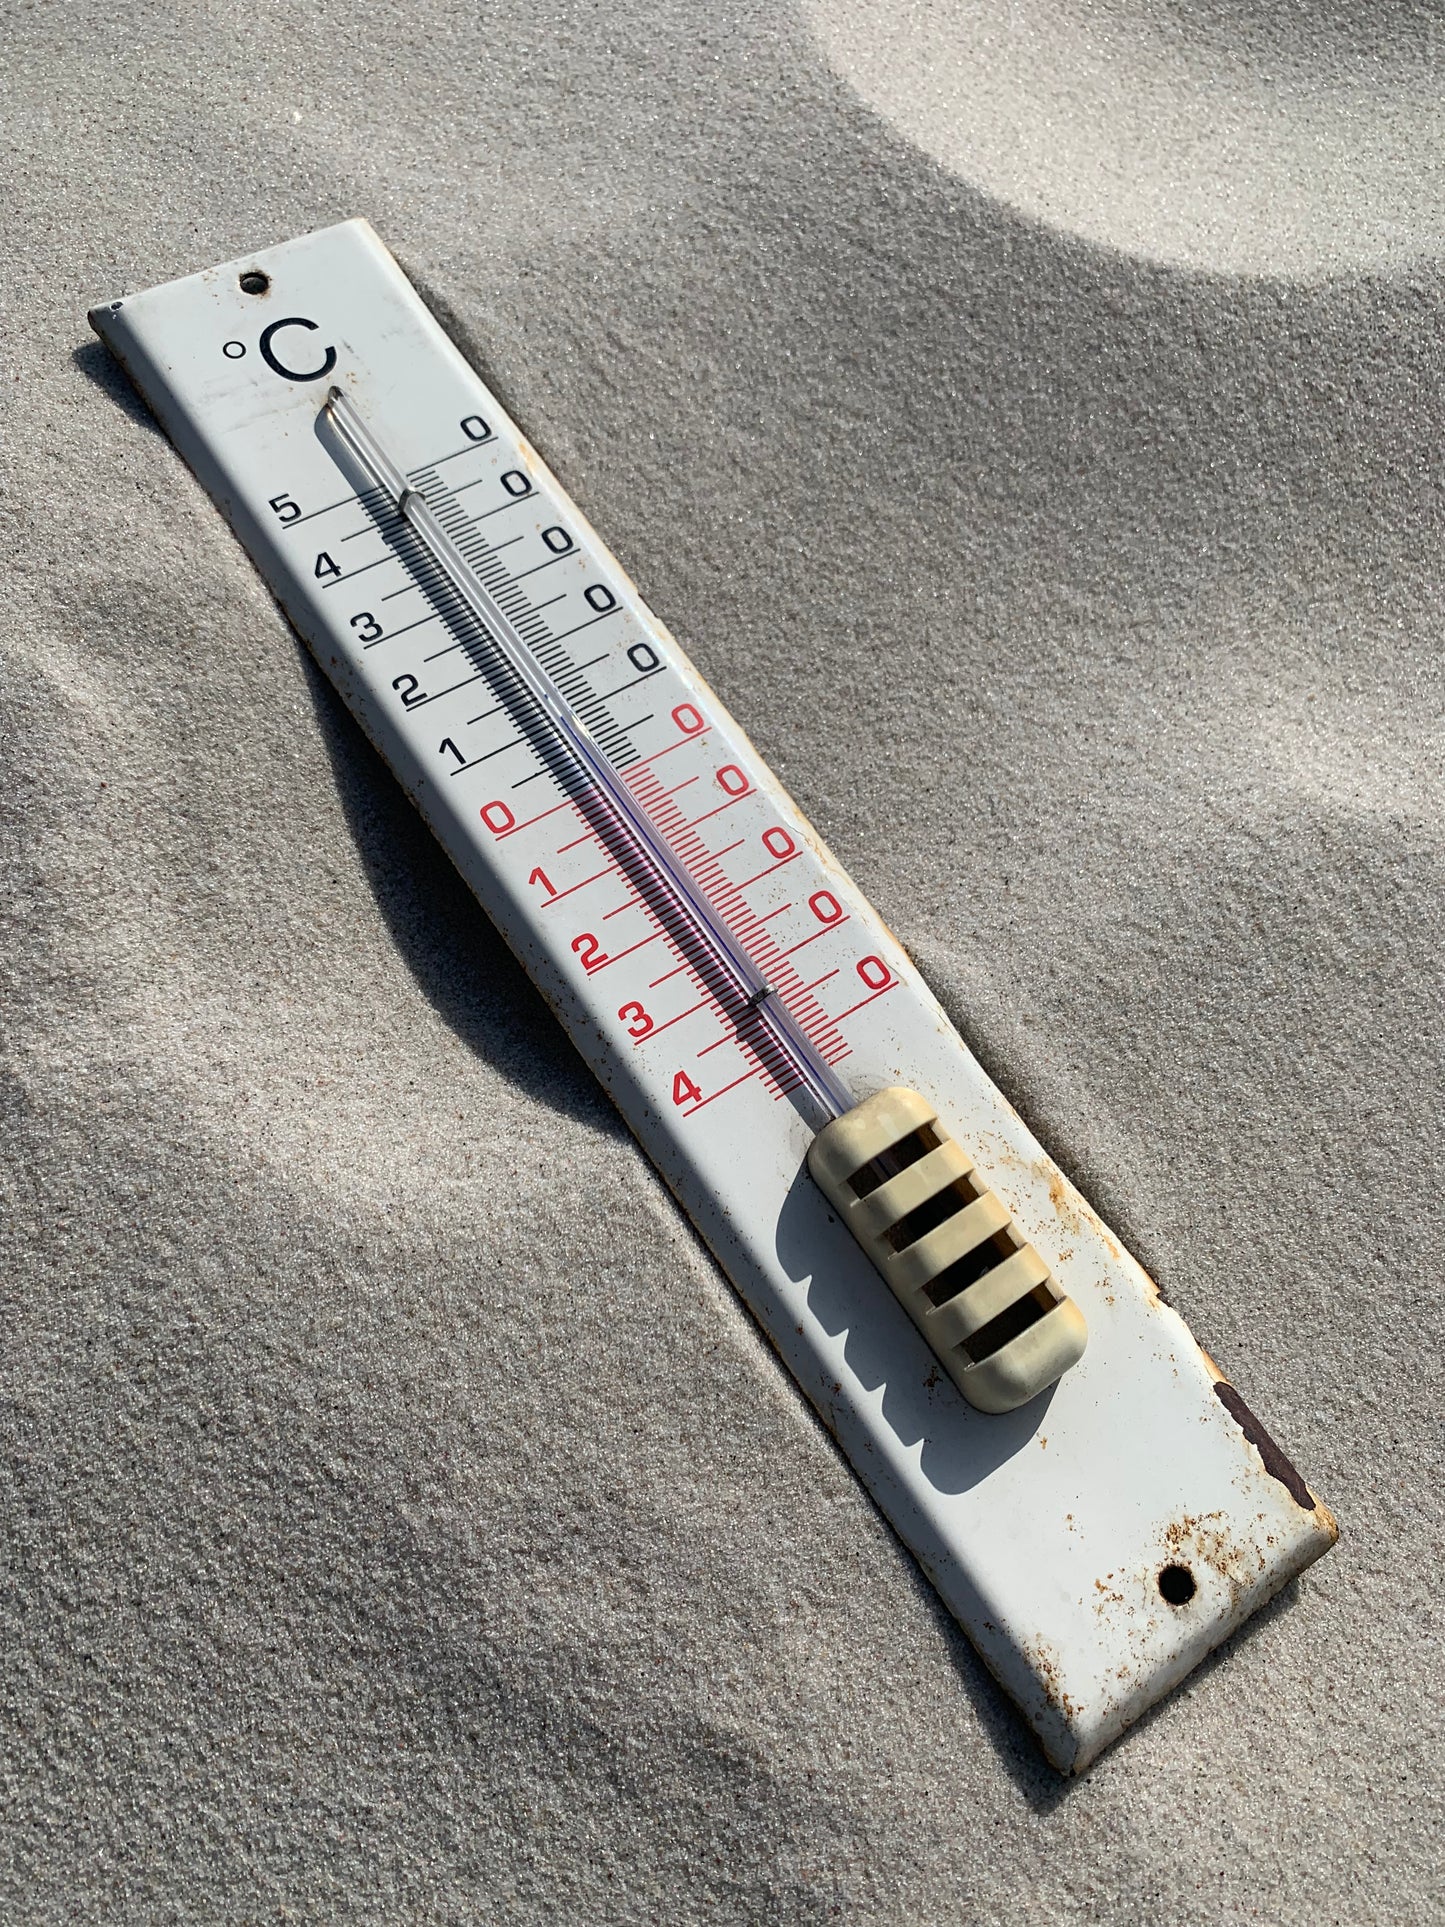 Emalj termometer